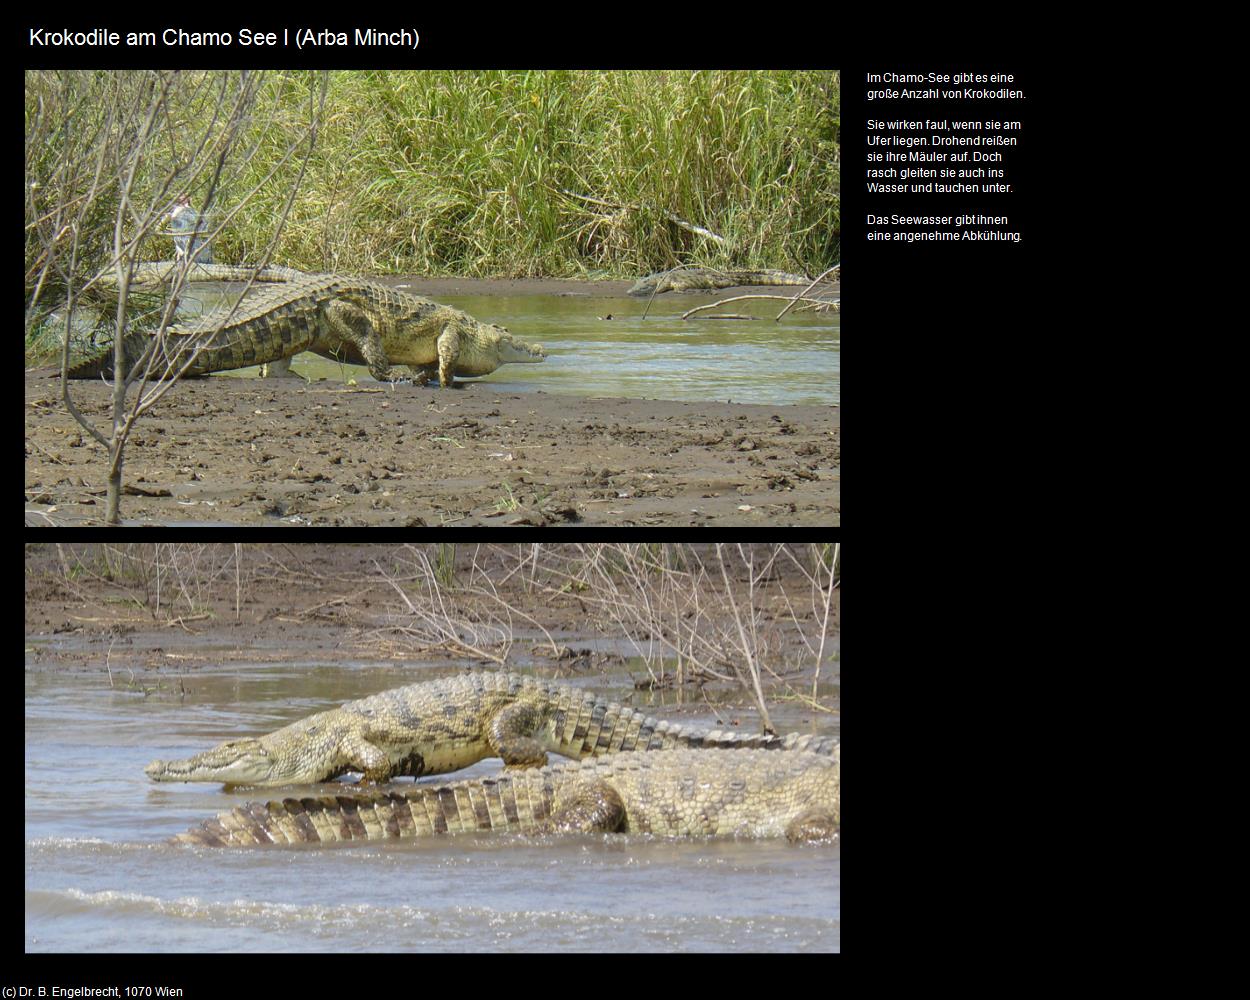 Krokodile am Chamo See I  (Arba Minch) in Äthiopien